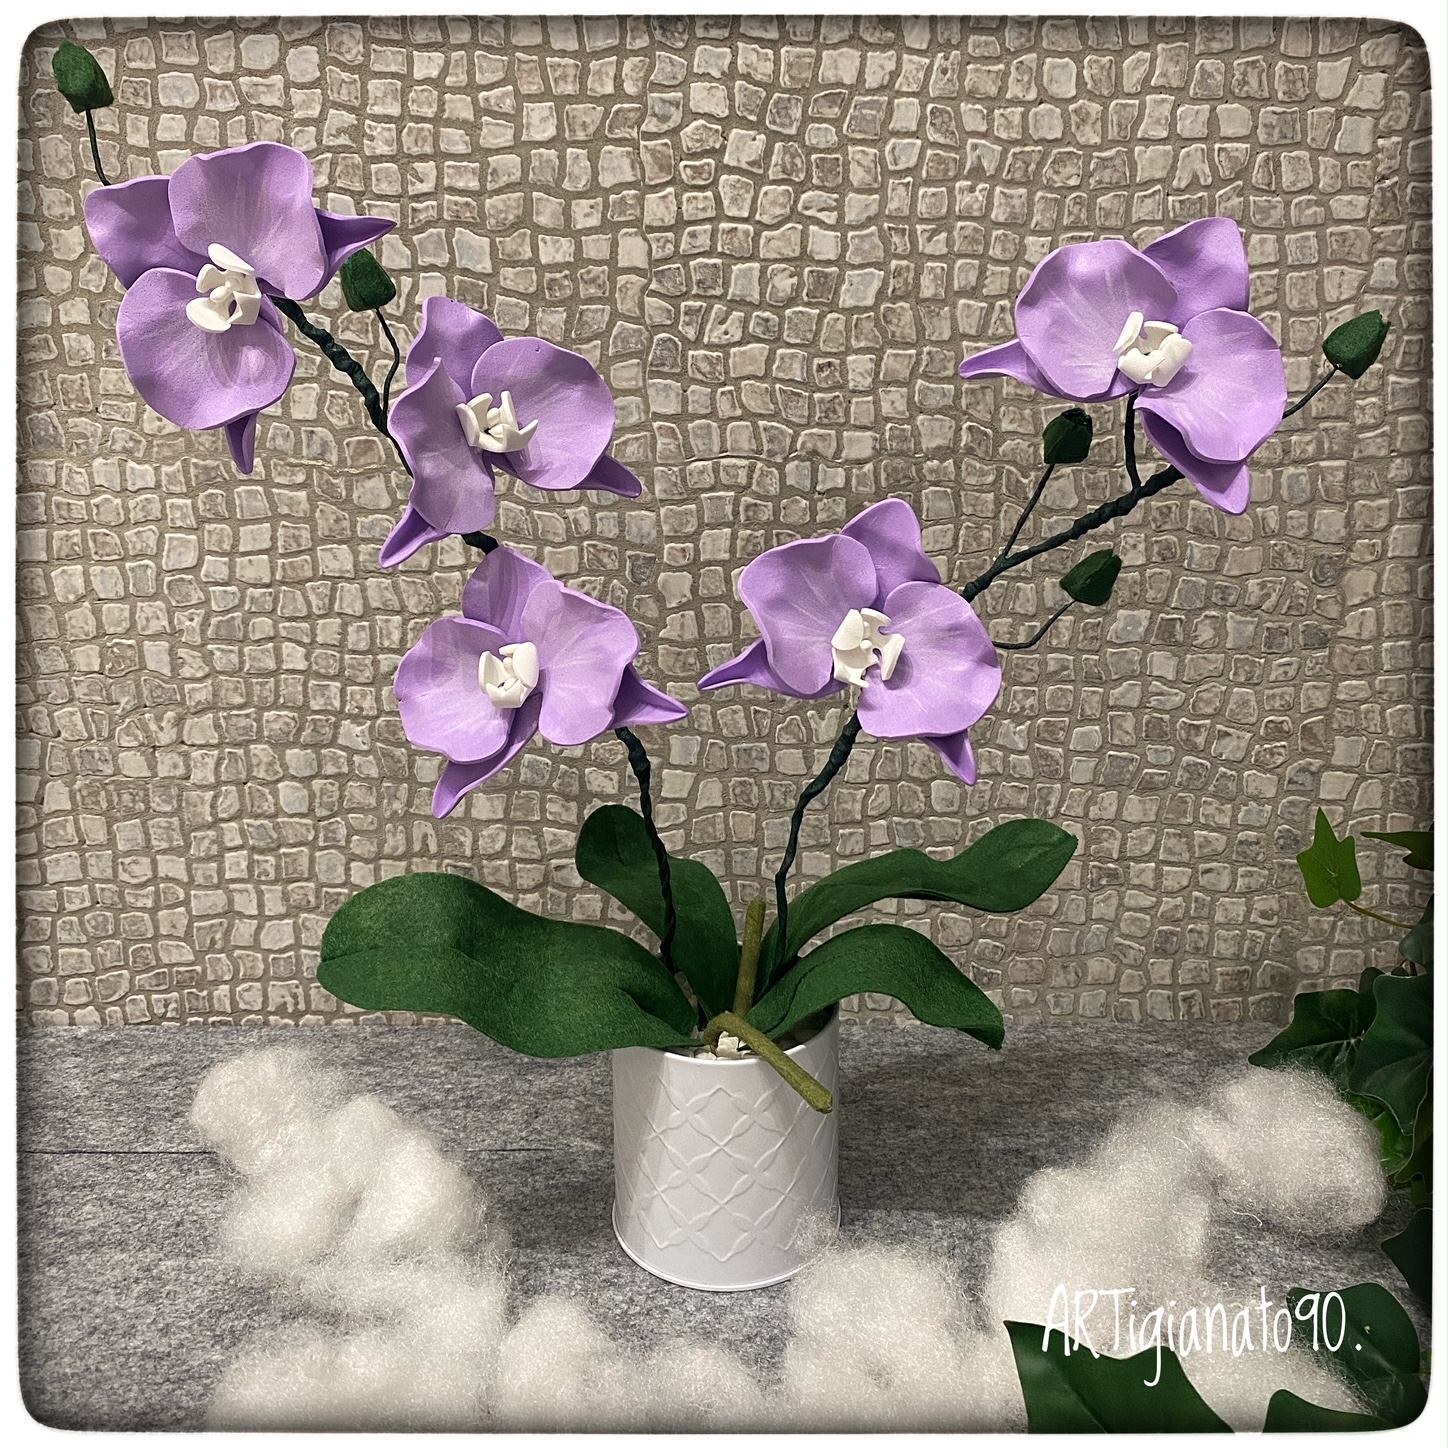 orchidea lilla gomma eva feltro handmade